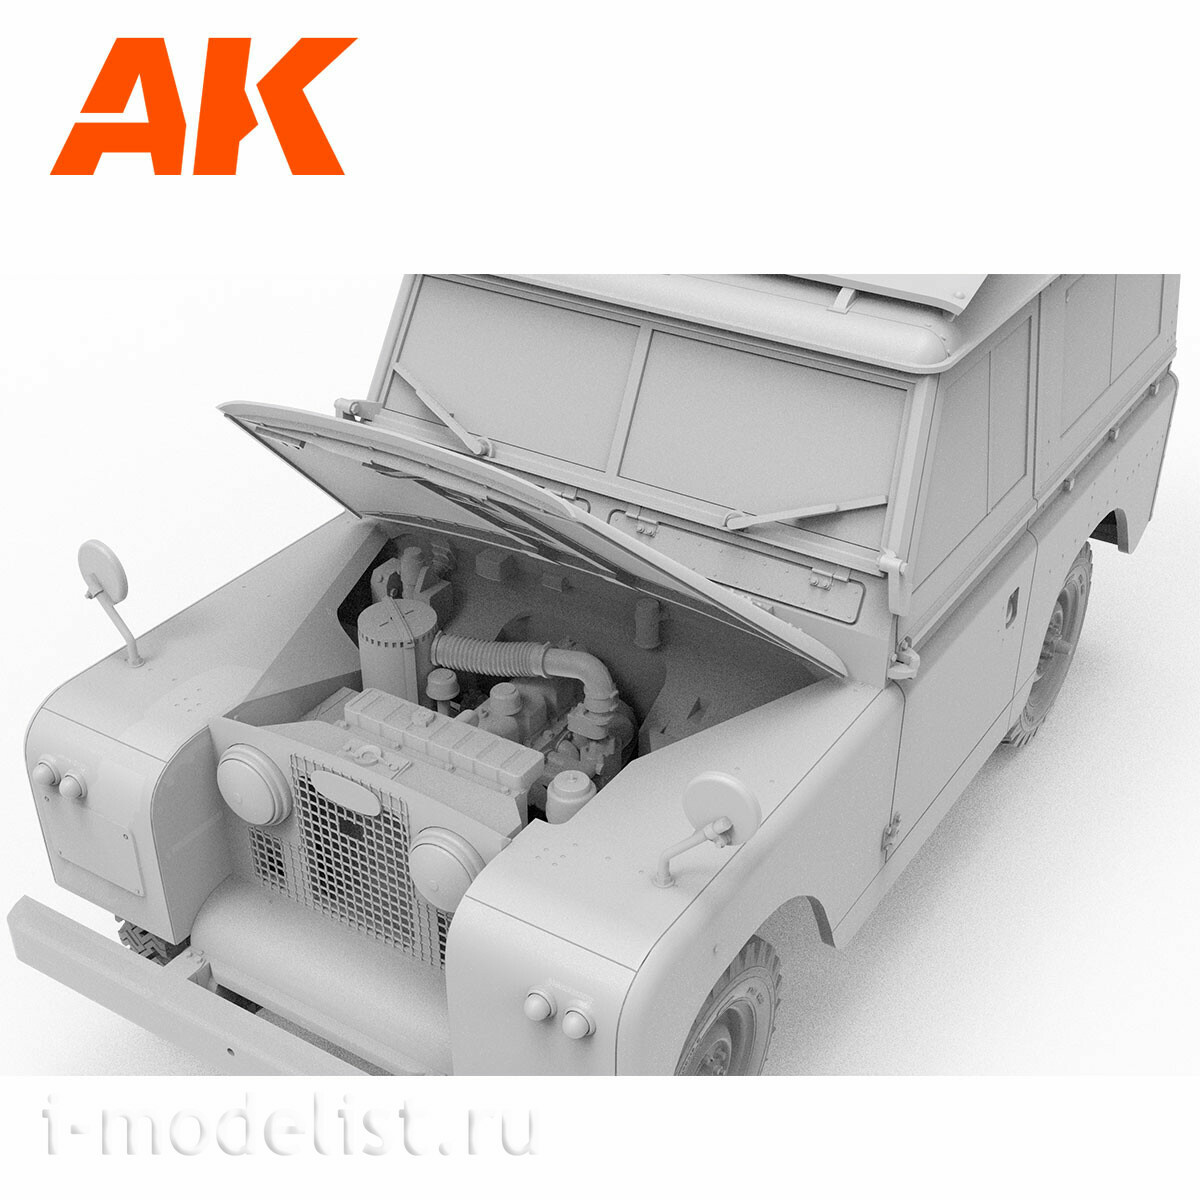 AK35013 AK Interactive 1/35 SUV Land Rover 88 Series IIA Station Wagon